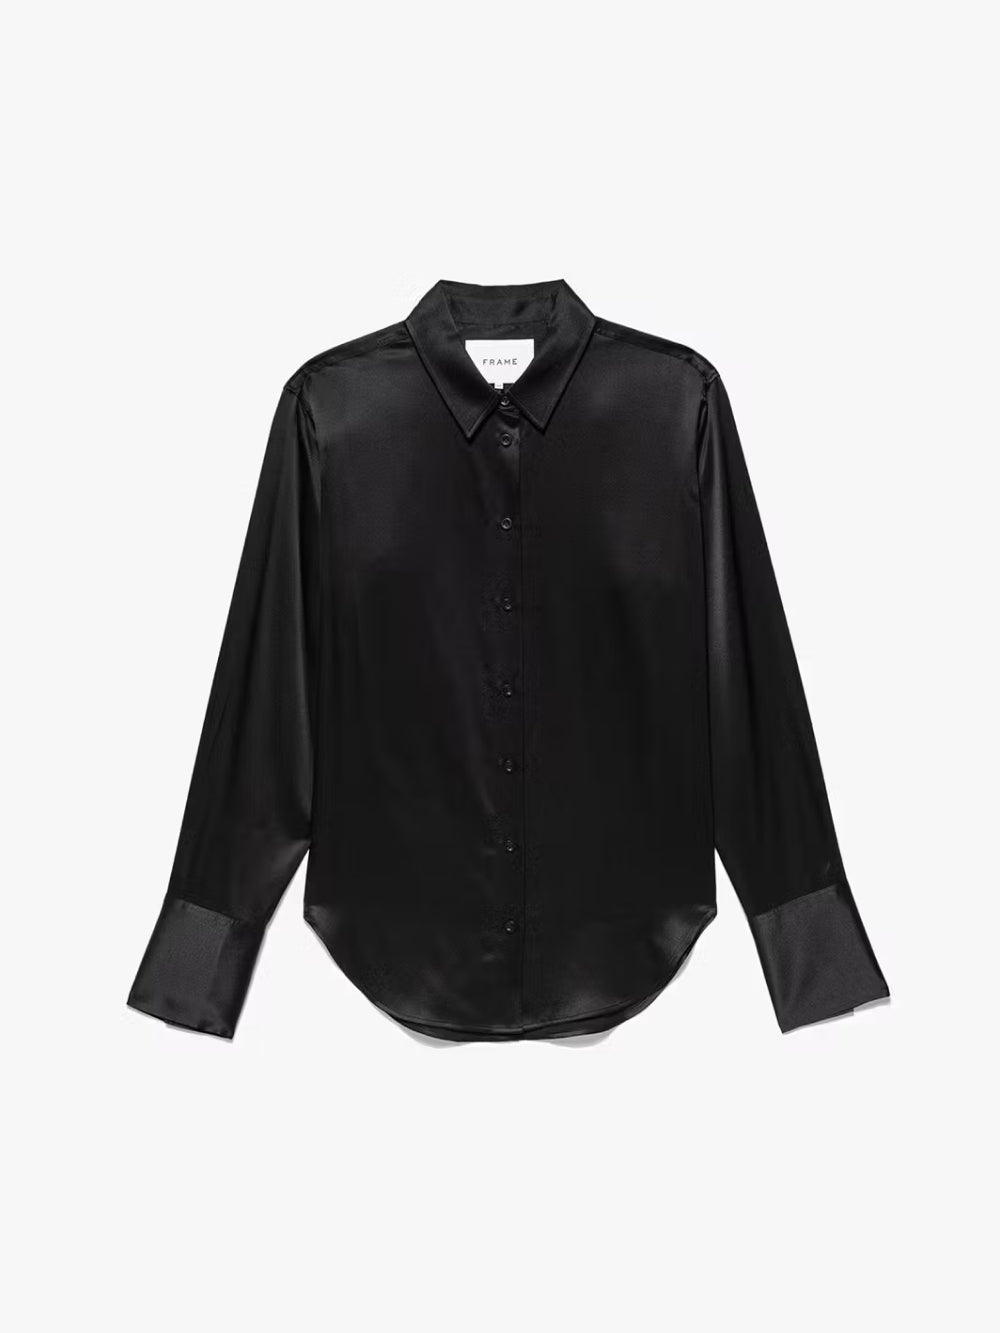 The Standard Shirt in Noir – FRAME